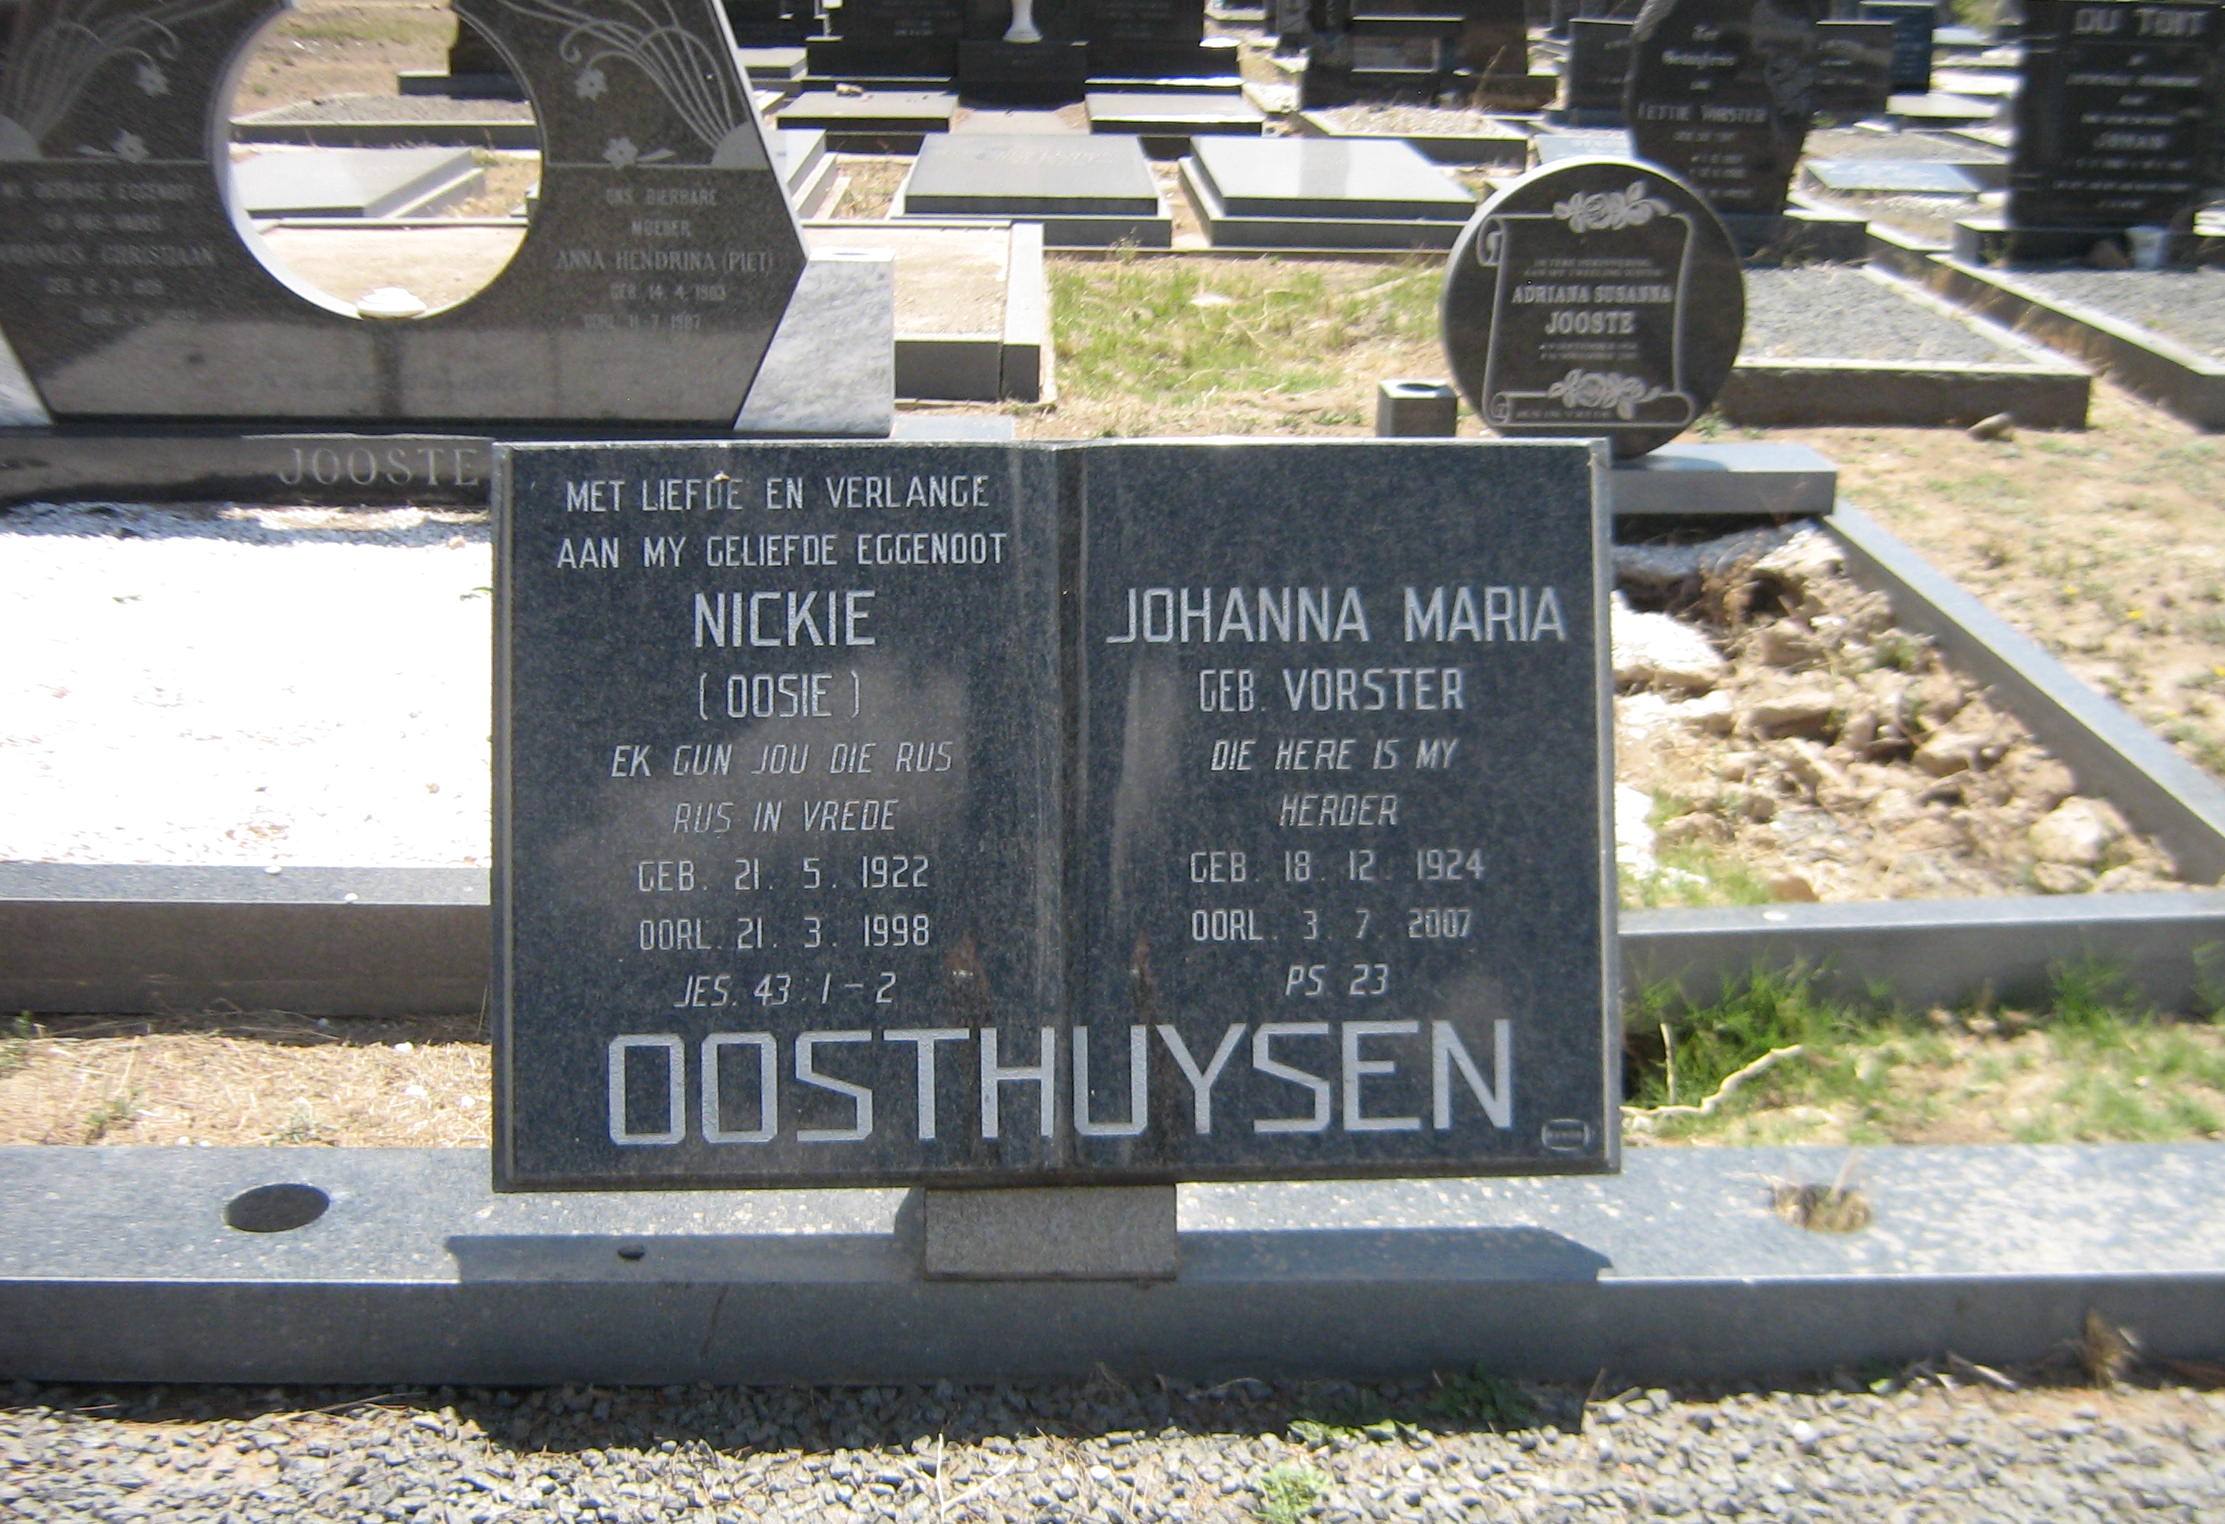 OOSTHUYSEN Nickie 1922-1998 & Johanna Maria VORSTER 1924-2007